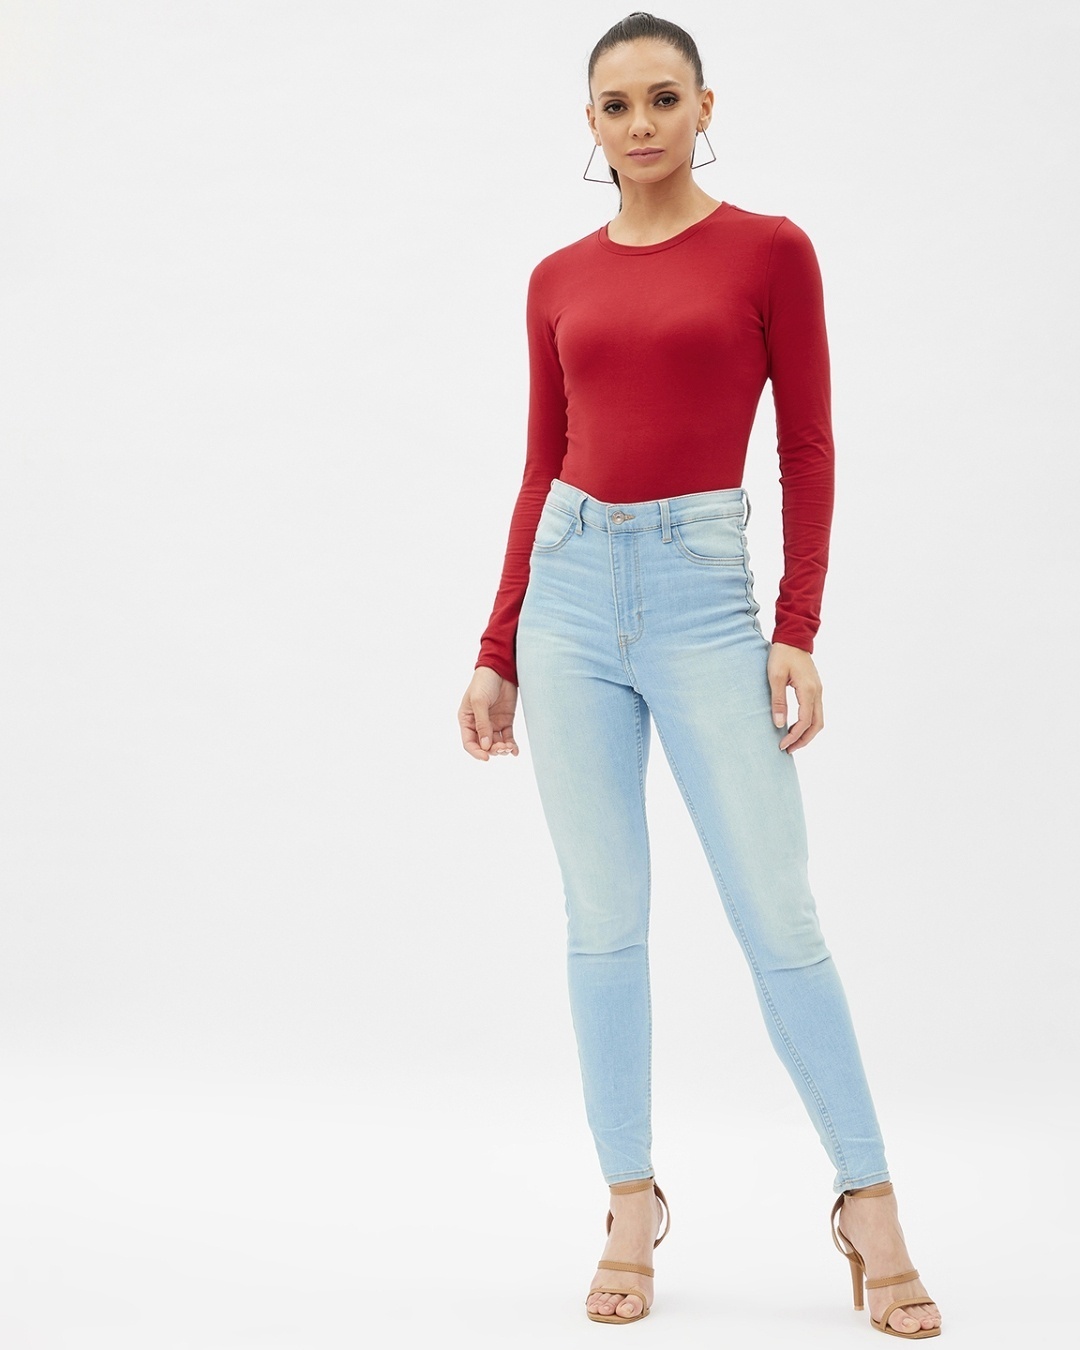 Shop Women's Red Cotton Long Sleeve Round Neck T-shirt